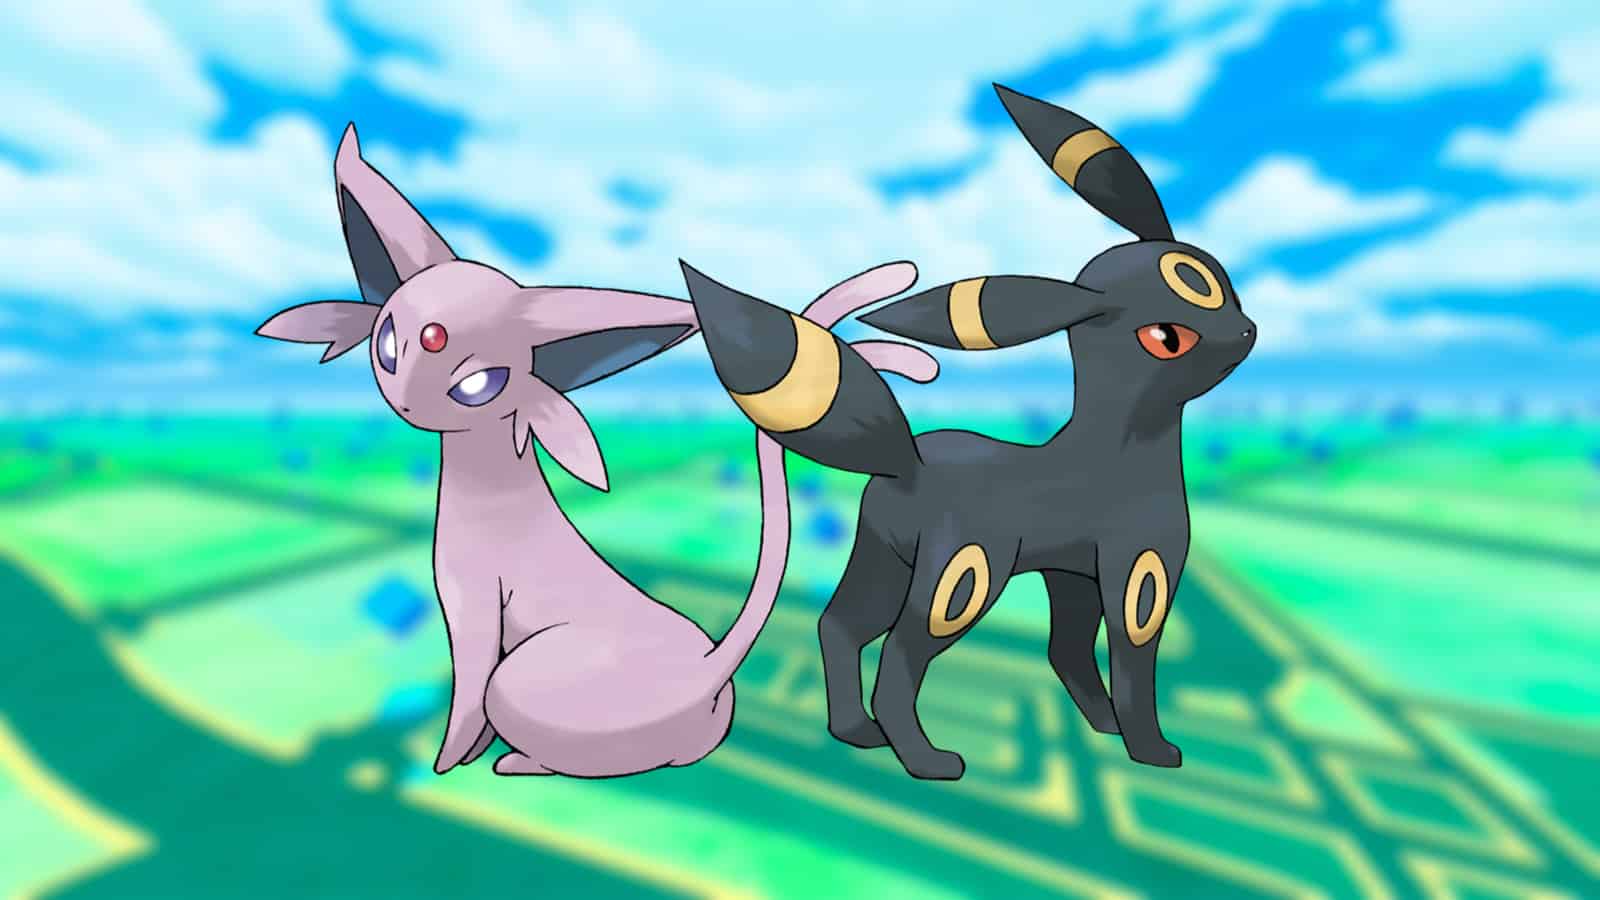 Espeon and Umbreon, Eevee's evolutions in Pokemon